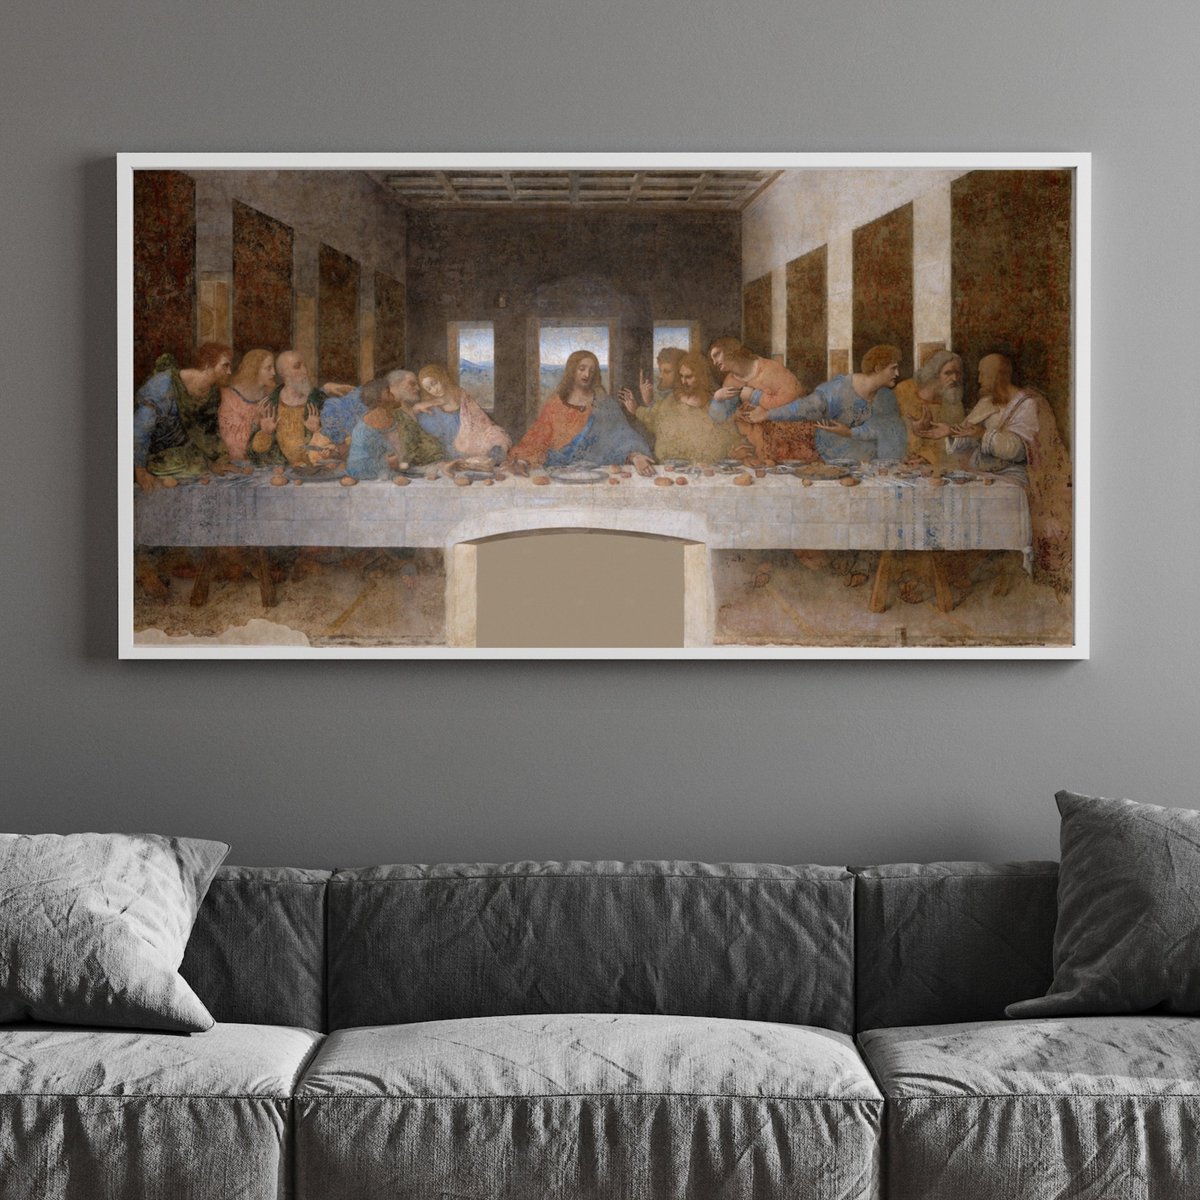 'Unraveling the Secrets of Leonardo da Vinci's The Last Supper (1495-1498) Poster' zazzle.com/leonardo_da_vi… 
#LeonardoDaVinci #TheLastSupper #ArtHistory #RenaissanceArt #Masterpiece #ArtAppreciation #ArtMysteries #ReligiousArt #Symbolism #ItalianArt